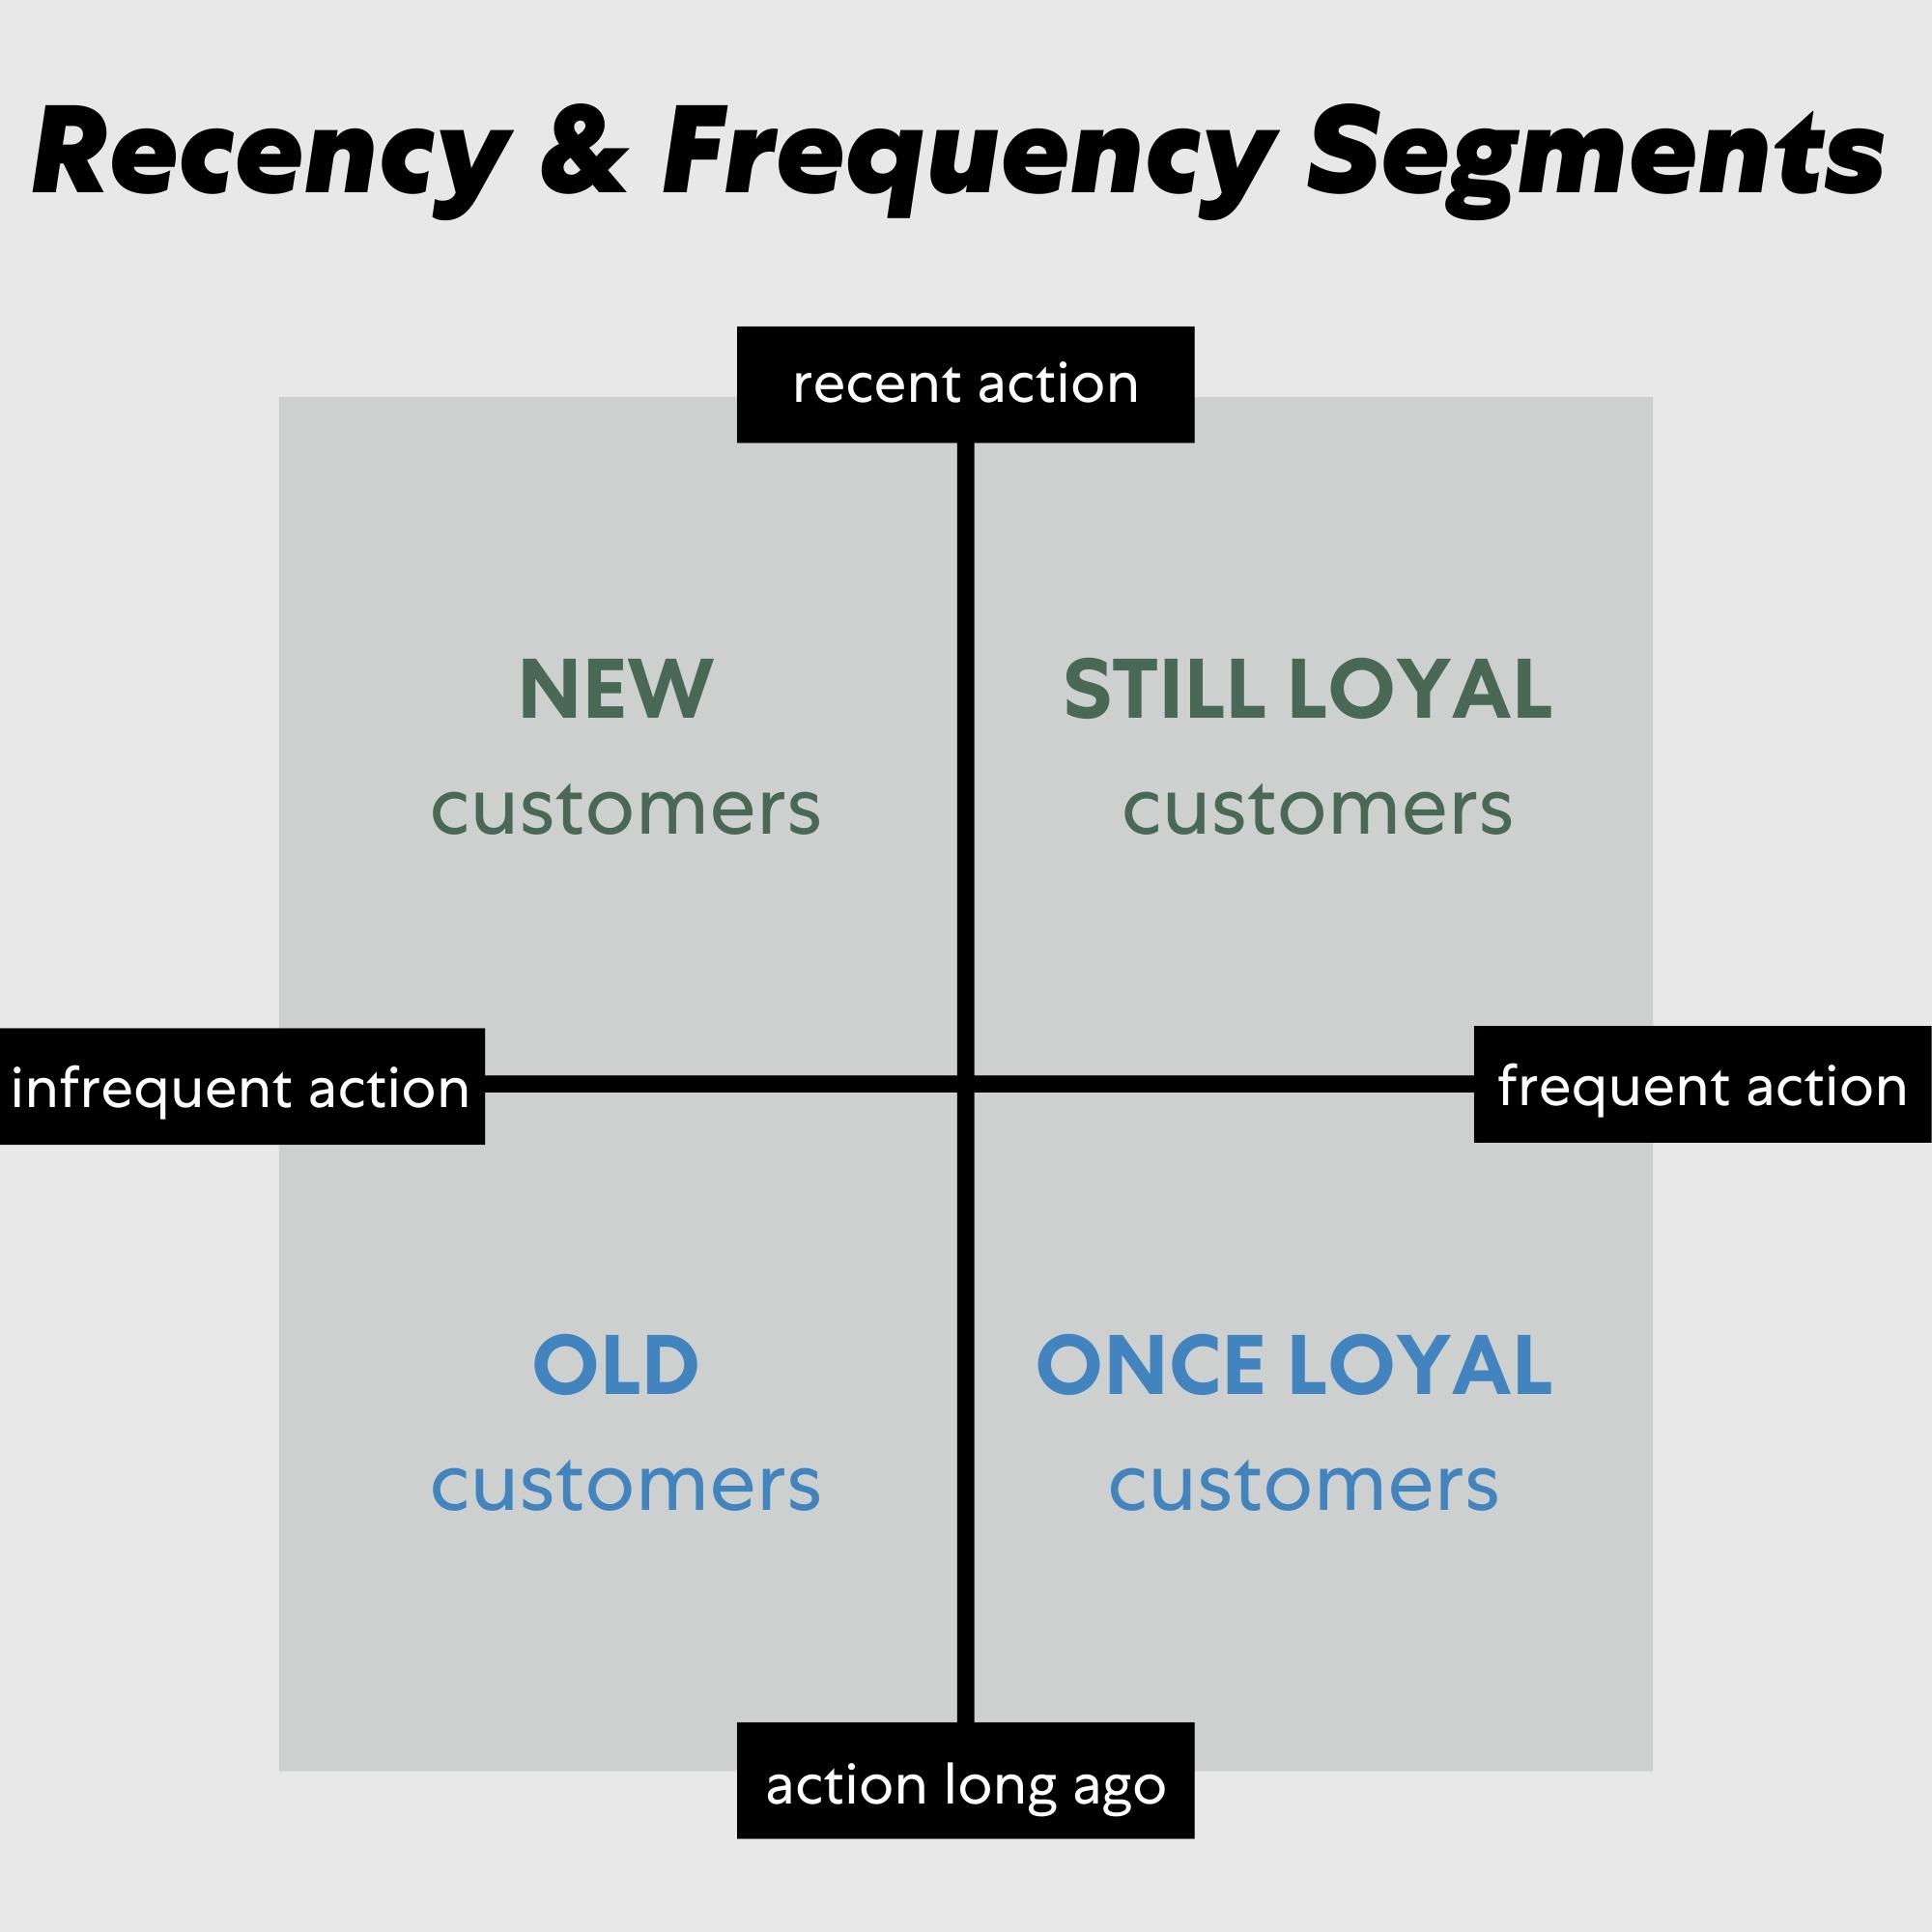 Recency & Frequency Segments